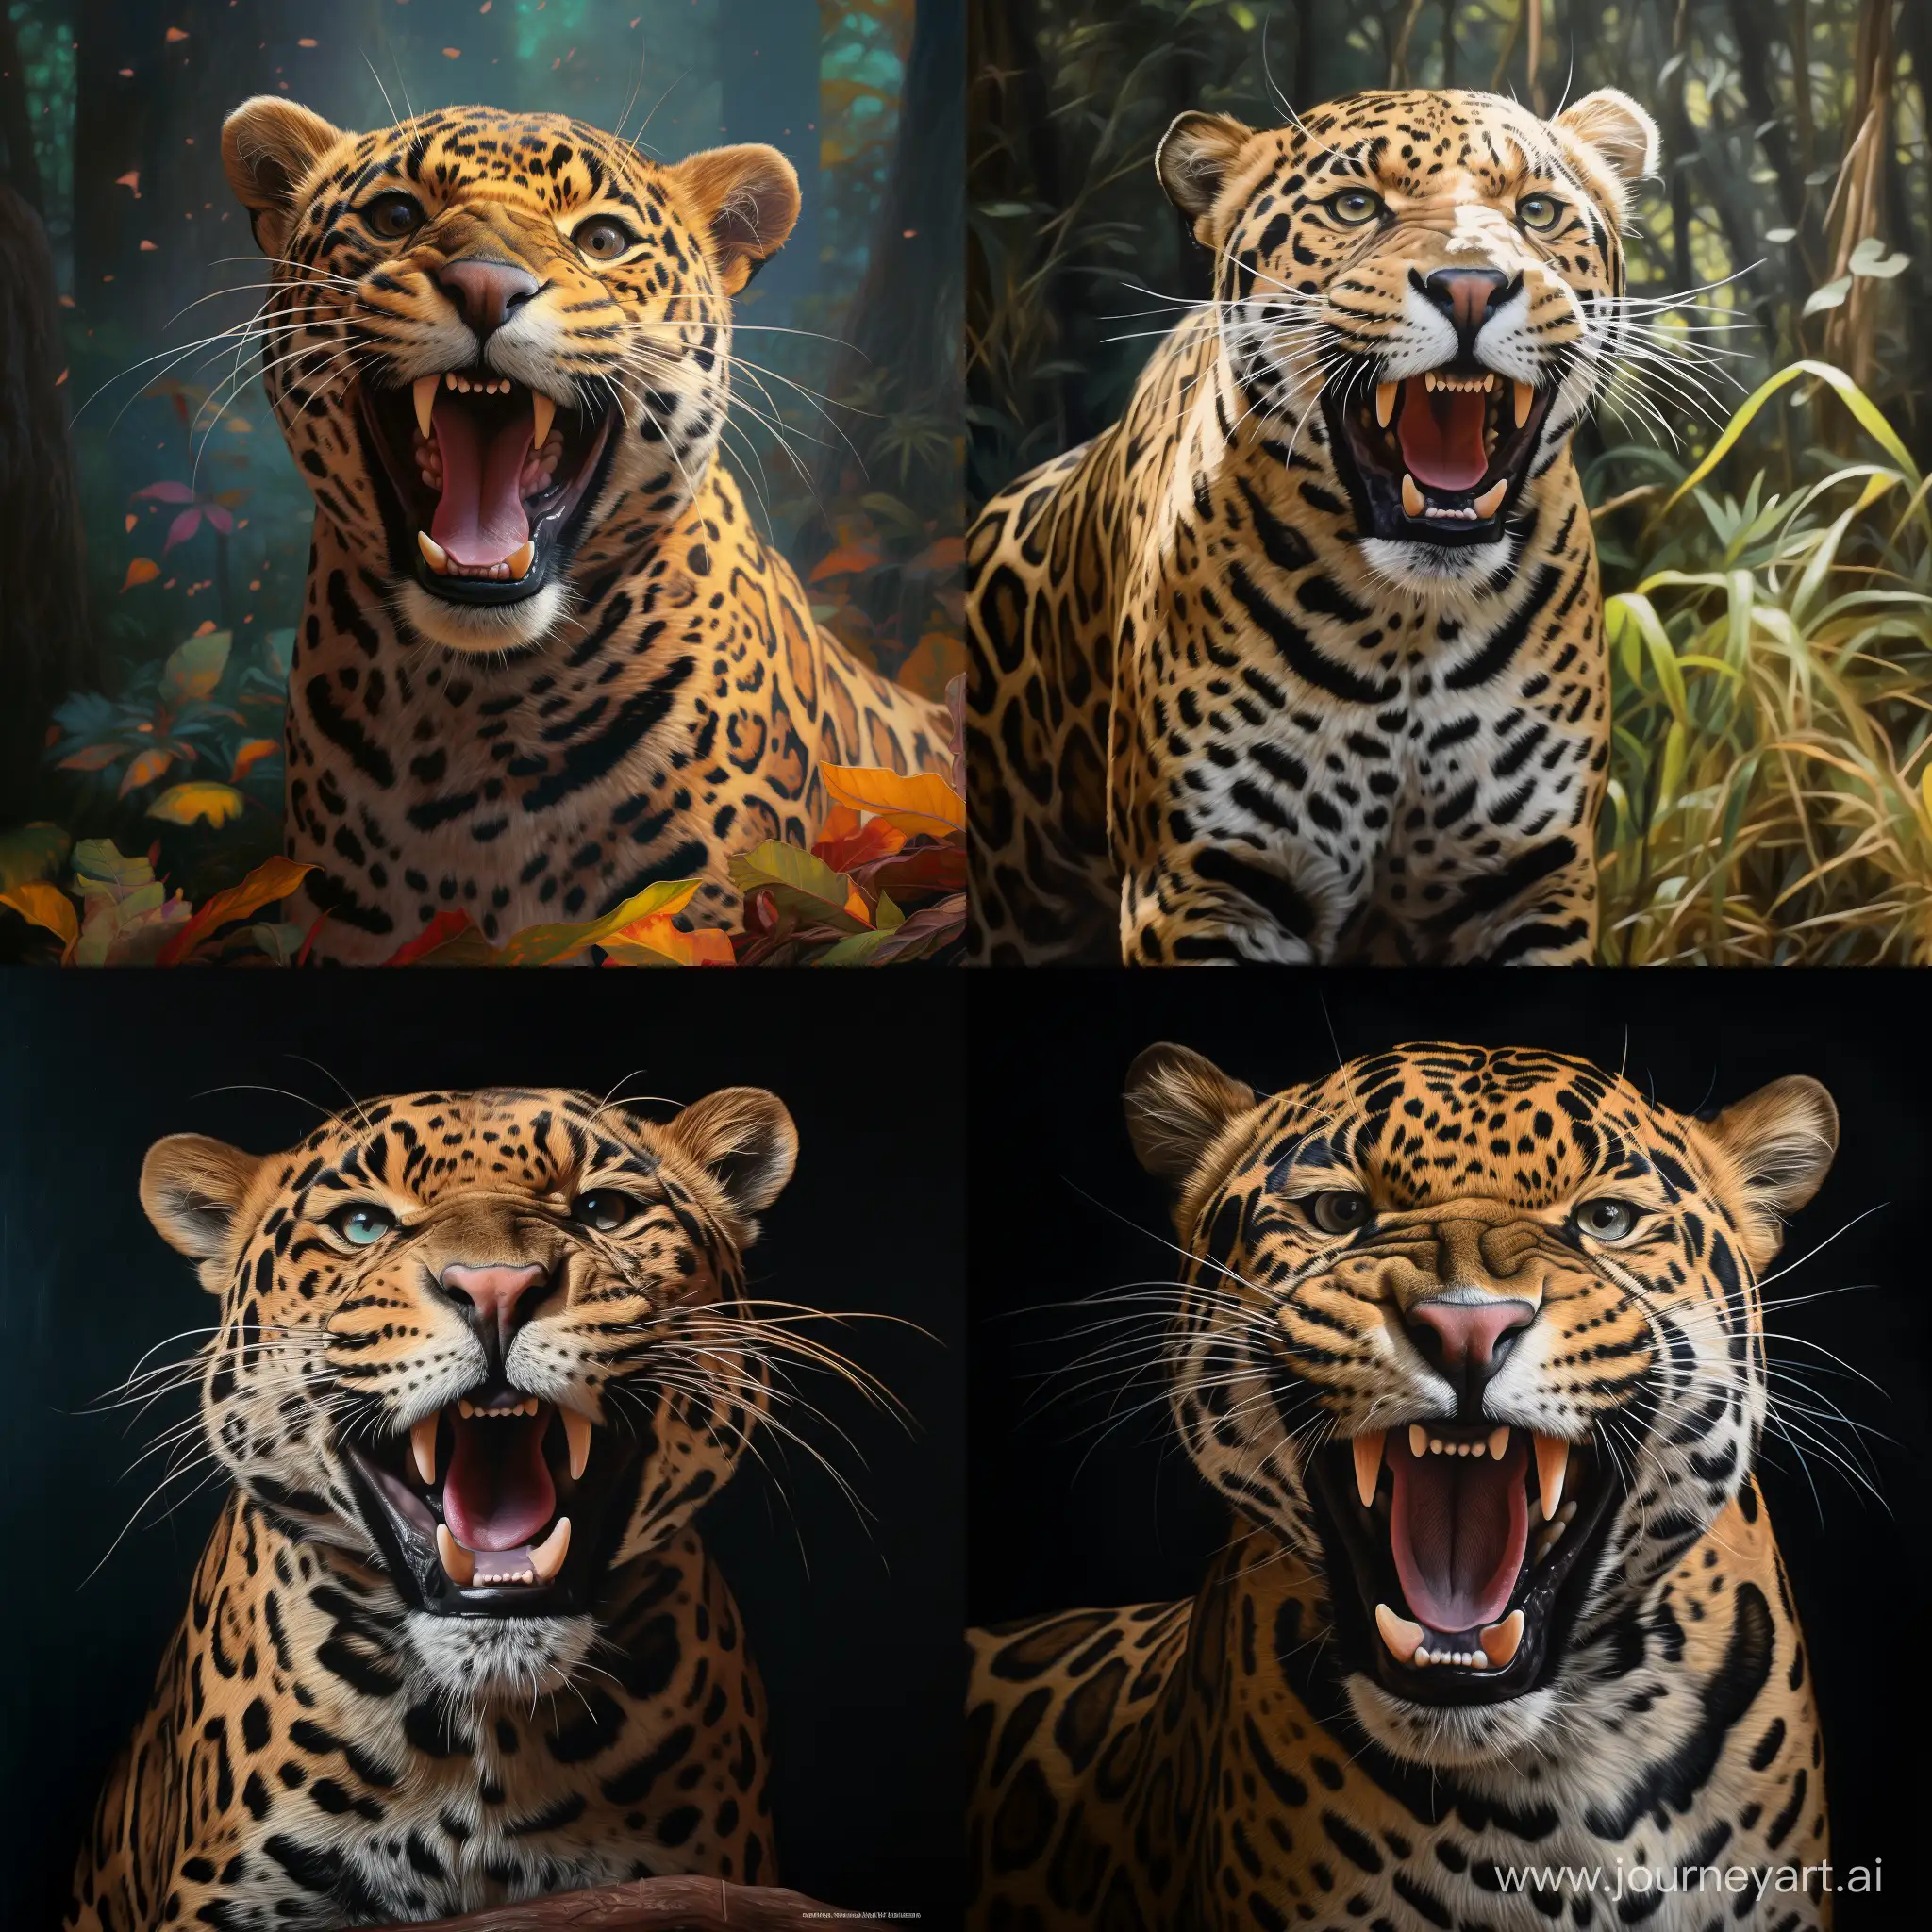 Joyful-Jaguar-Smiling-in-a-11-Aspect-Ratio-Wildlife-Art